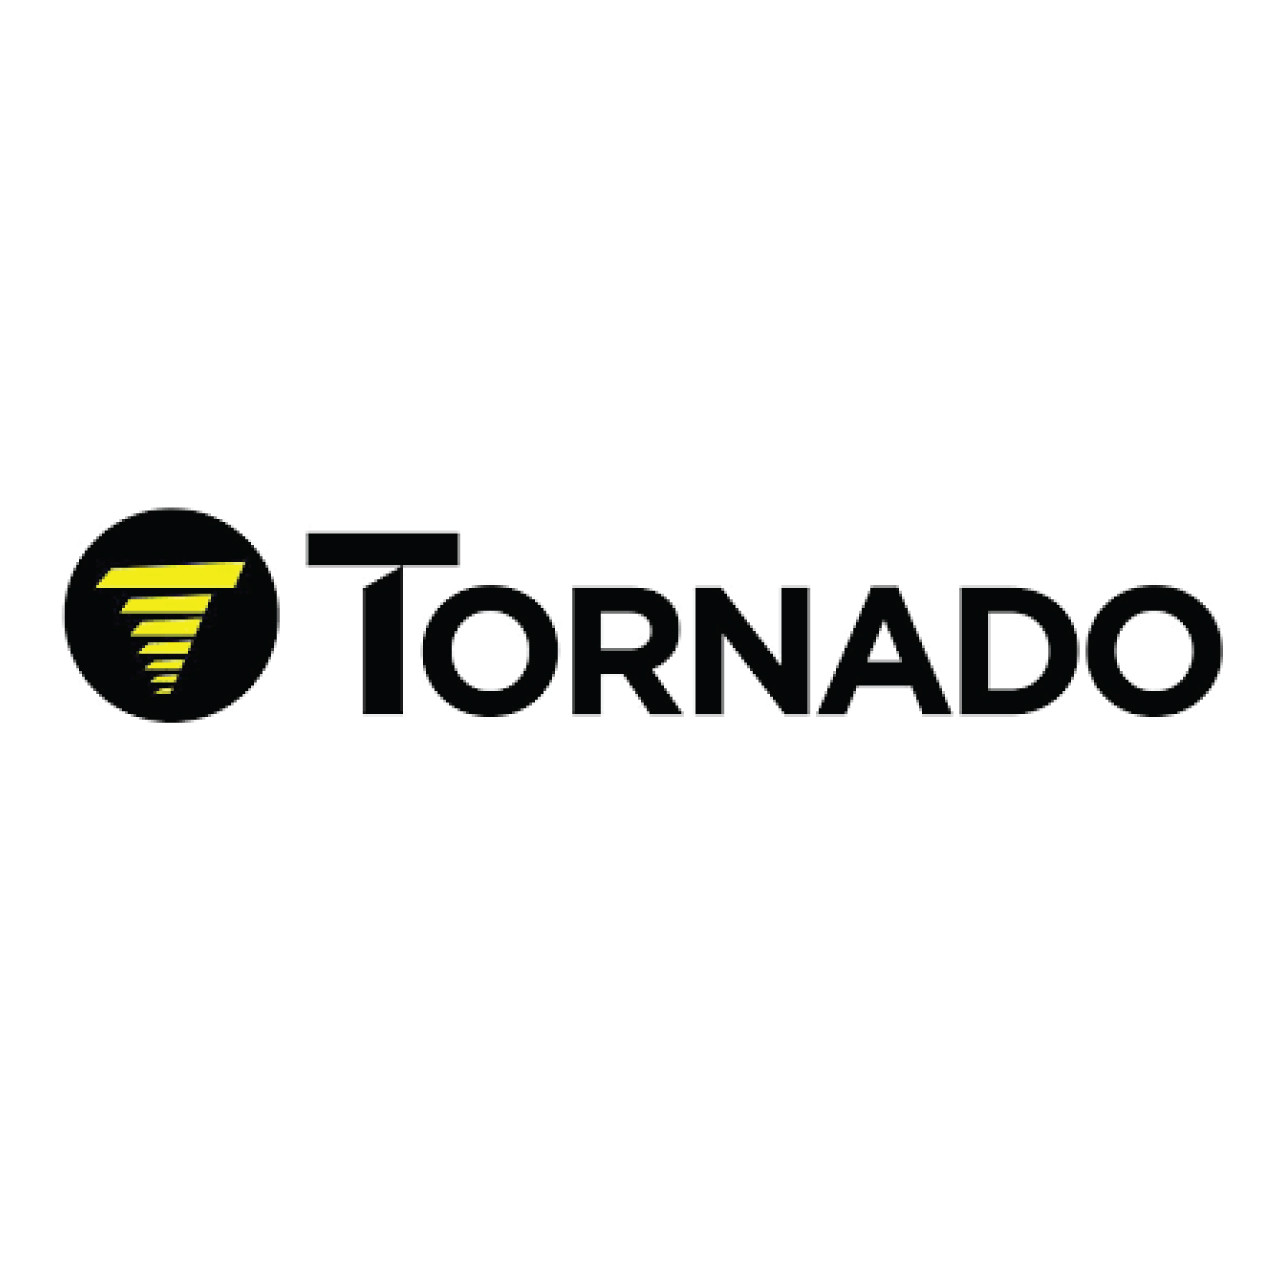 02-4482-0000, Tornado 02-4482-0000, Tornado O RING (REF: BS014NI70), Tornado parts